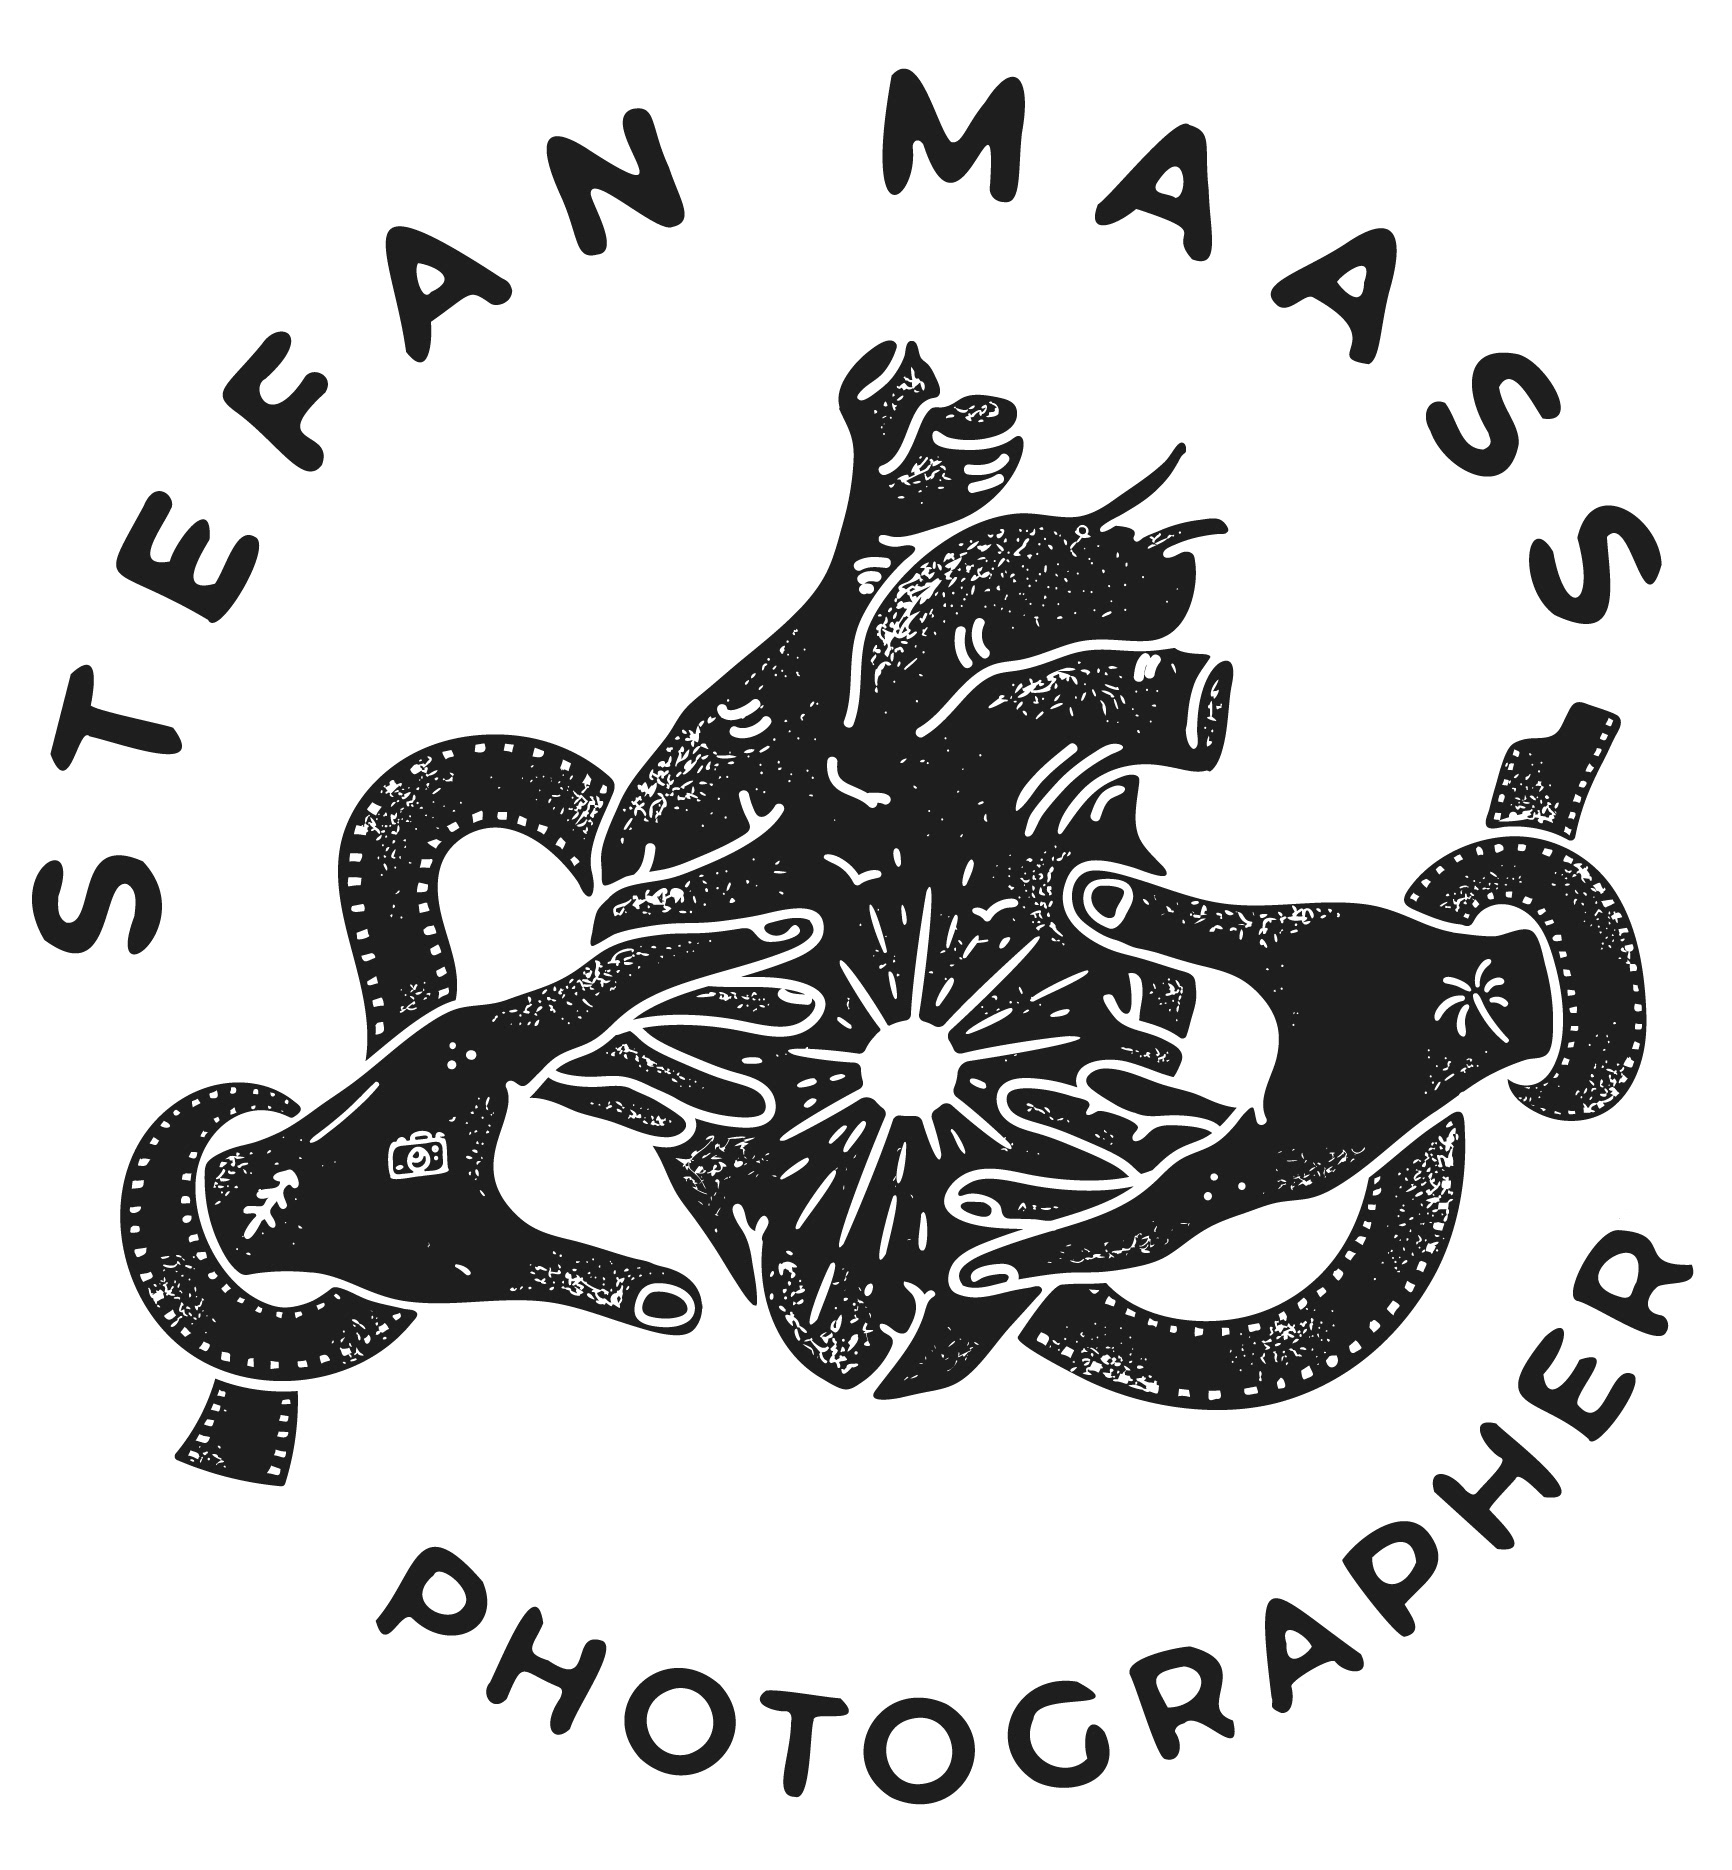 Stefan Maaß Photographer